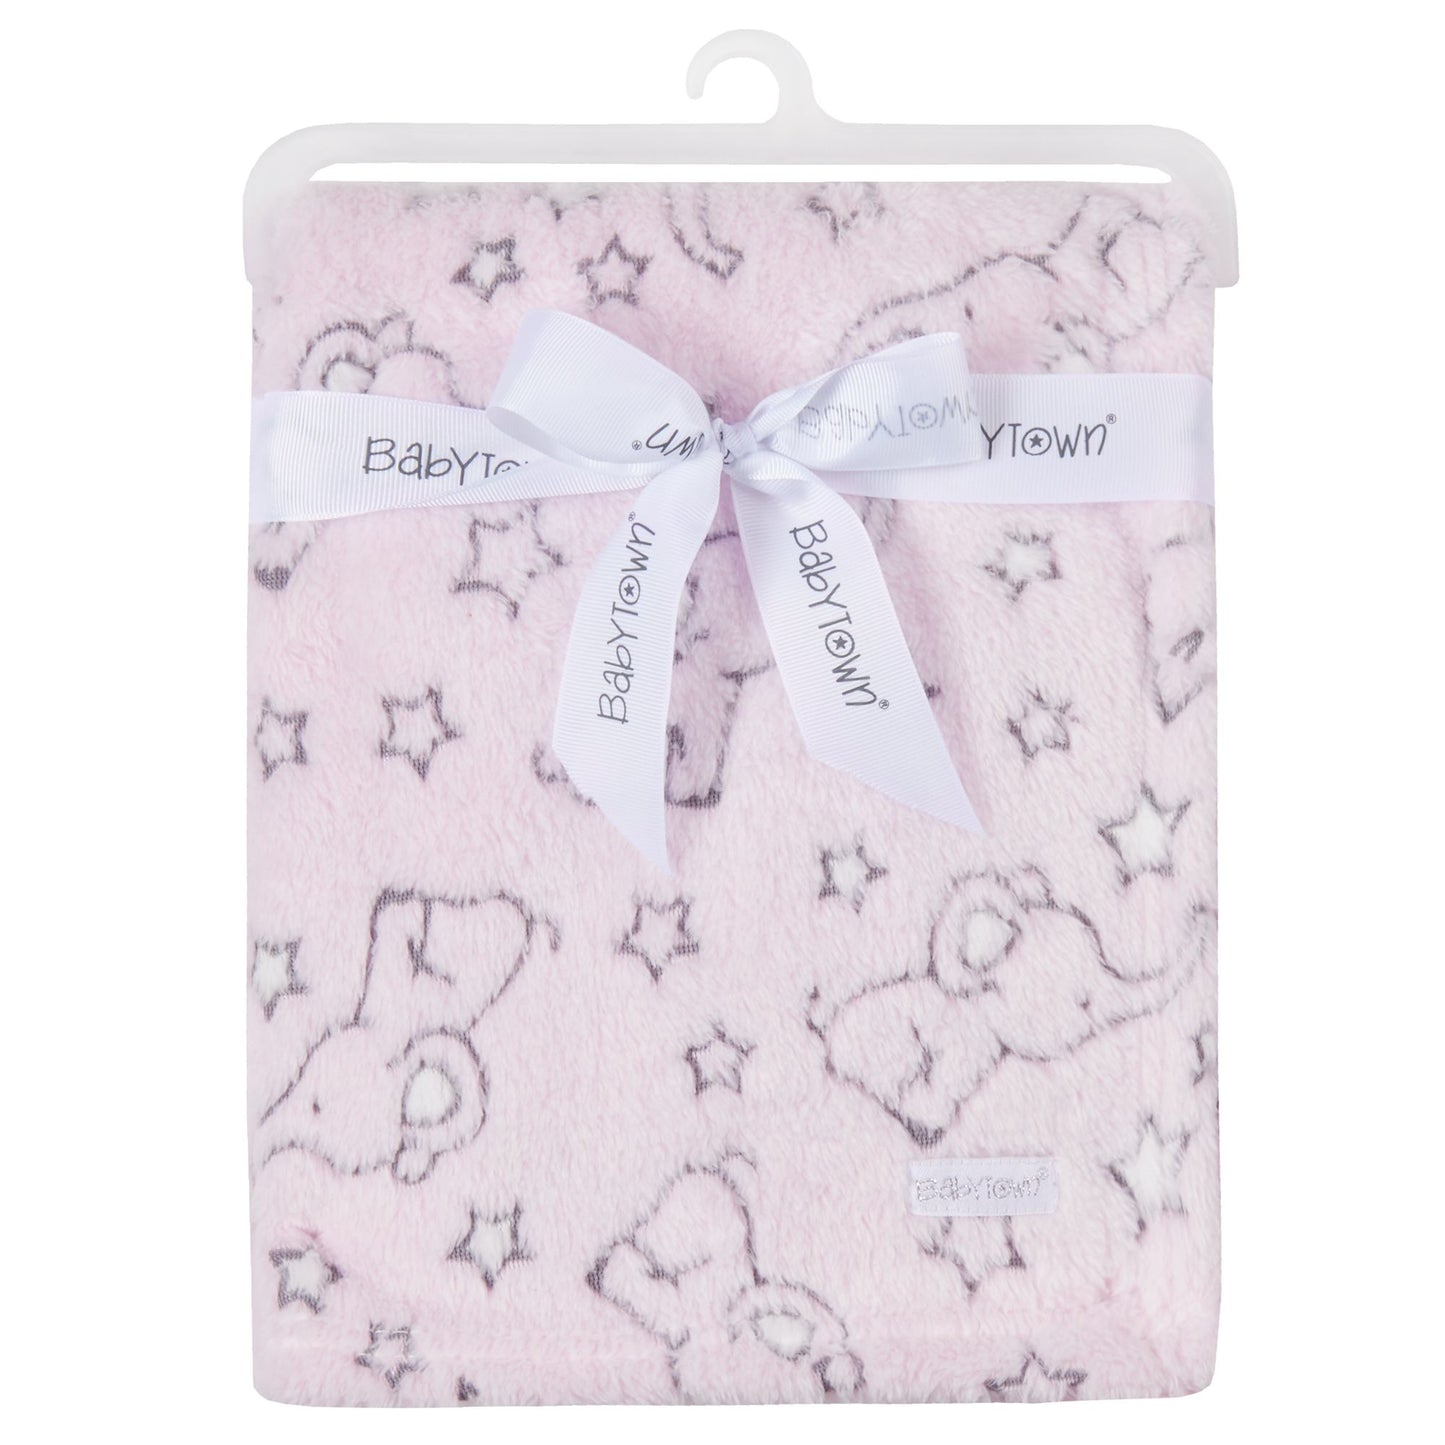 Babies Super Soft Fleece Blanket ~ Elephant or Lamb